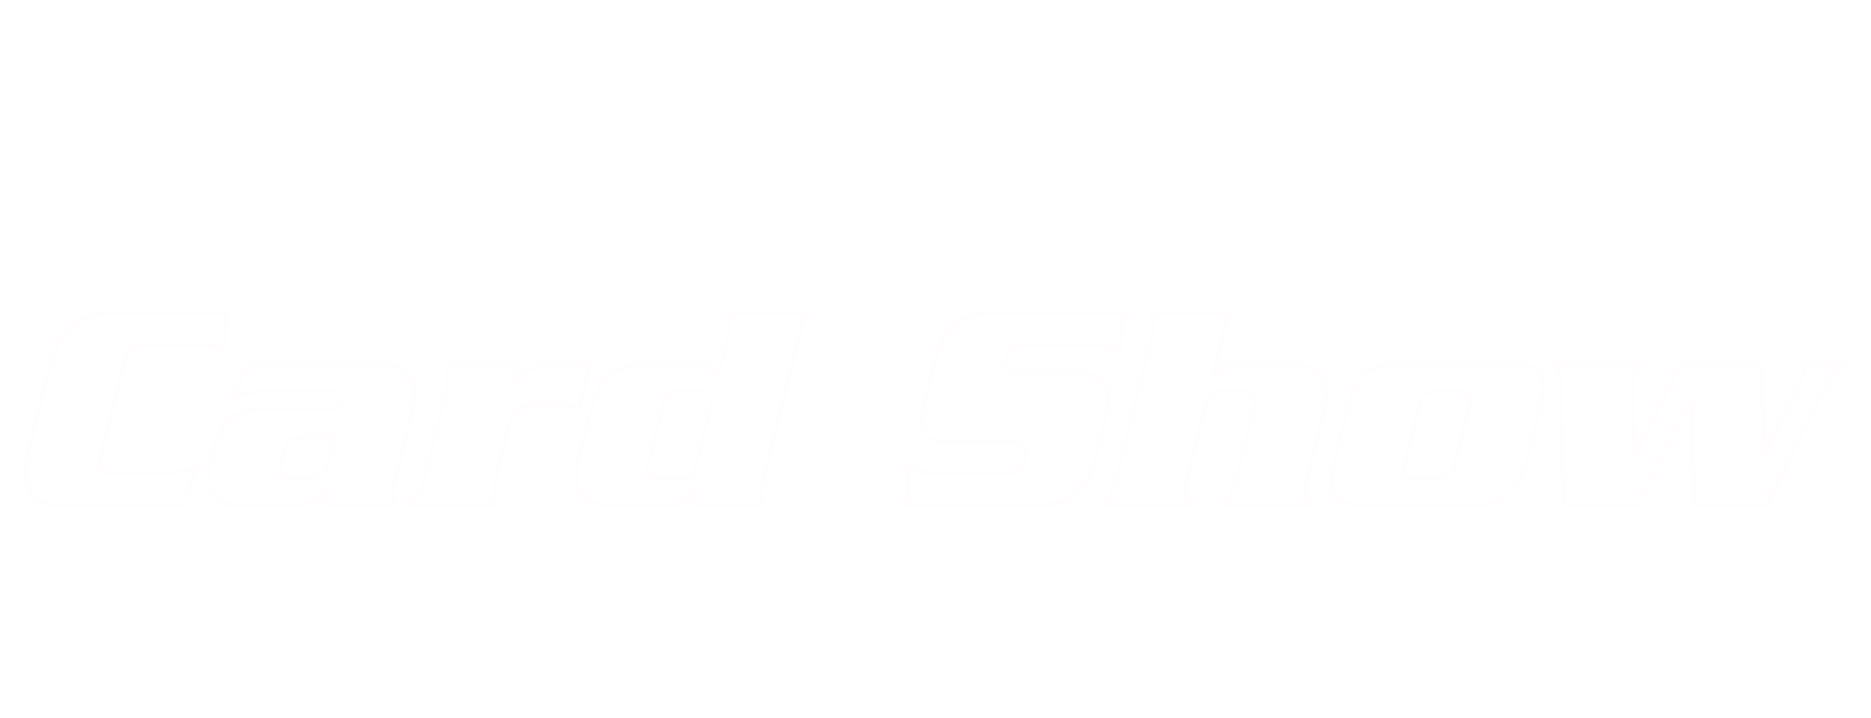 Burbankcardshow